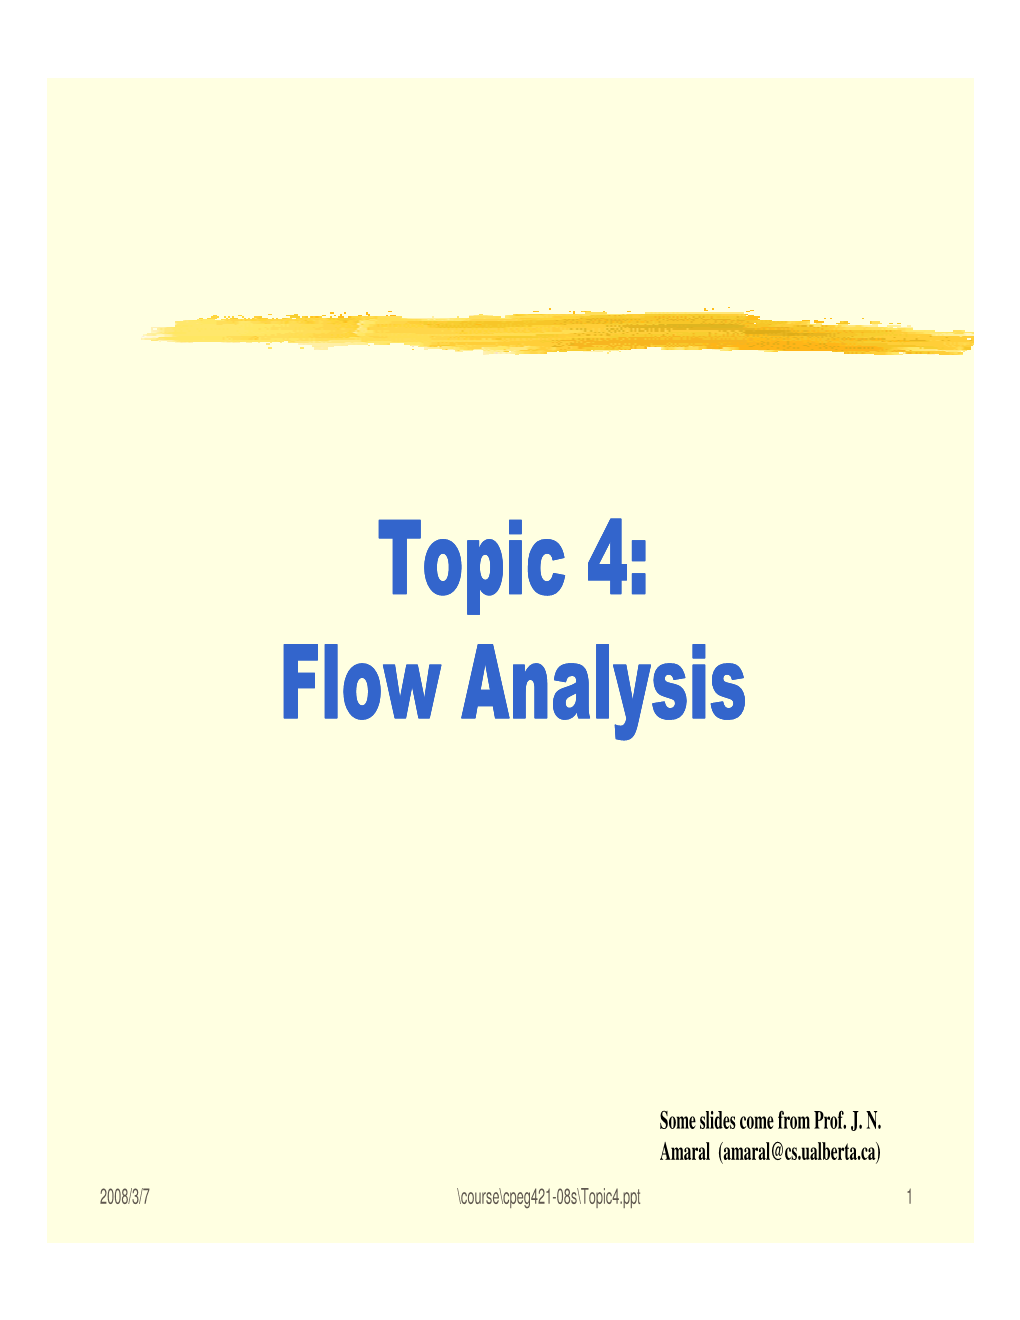 Topic 4: Flow Analysis